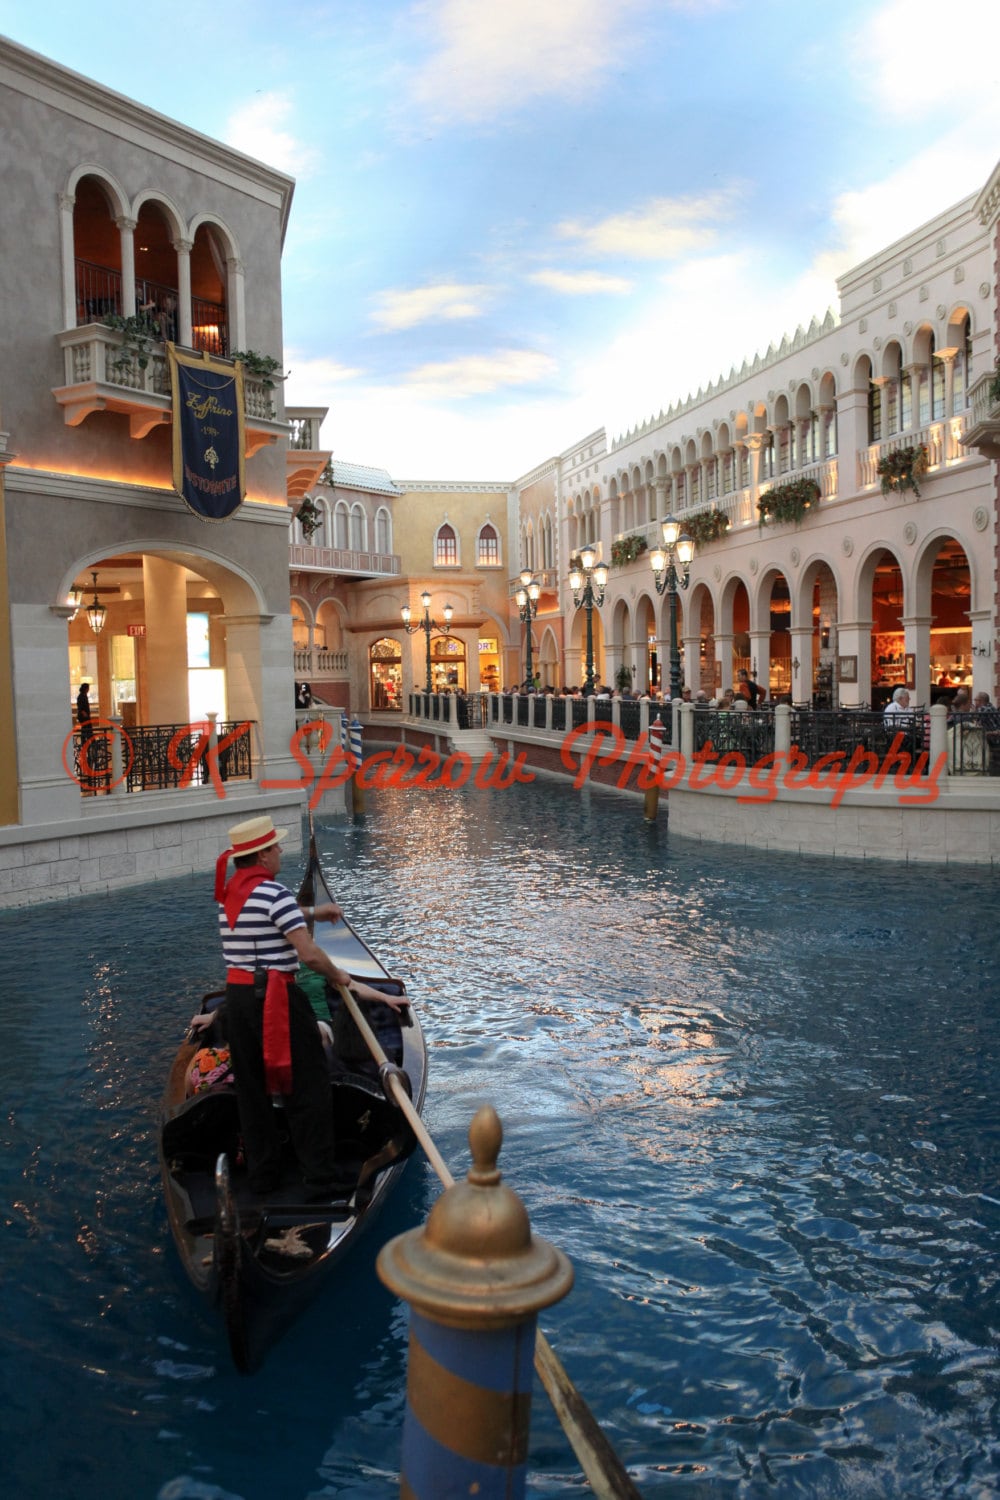 Gondola Ride at the Venetian Hotel and Casino